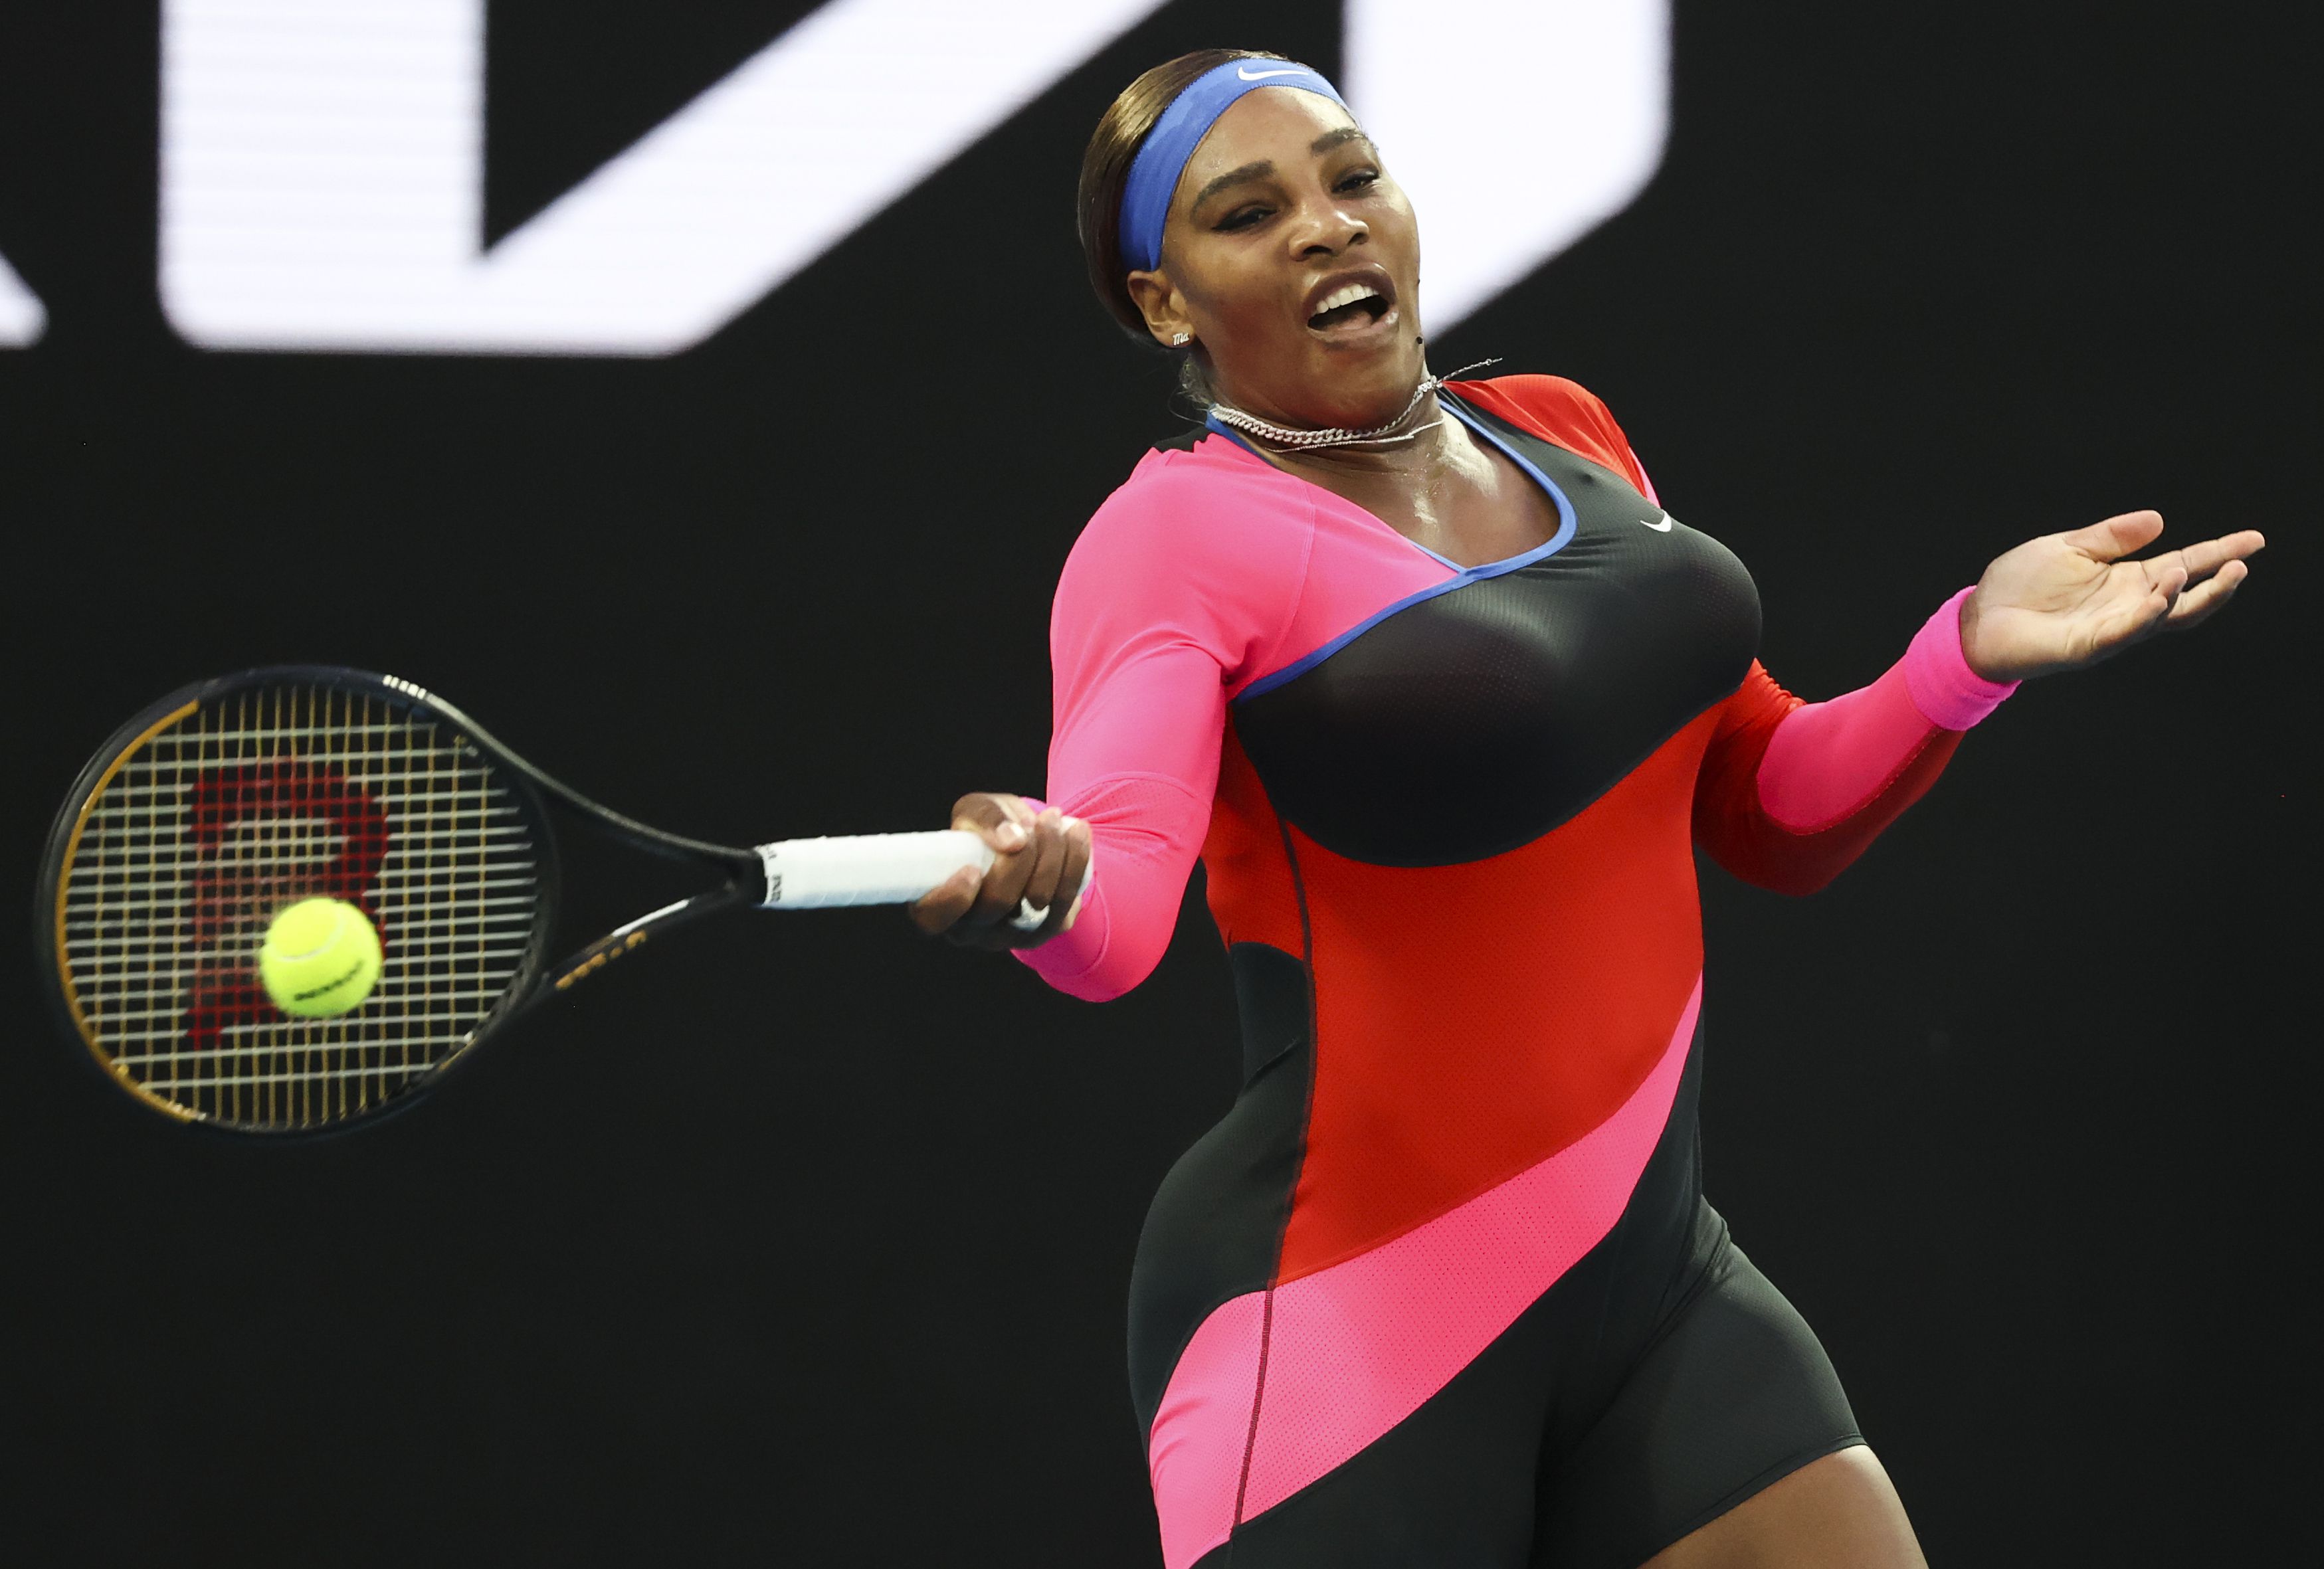 Australian Open 2021 Semifinals LIVE STREAMS | Watch Serena Williams vs. Naomi Osaka, Novak Djokovic, online | Time, TV, channel -